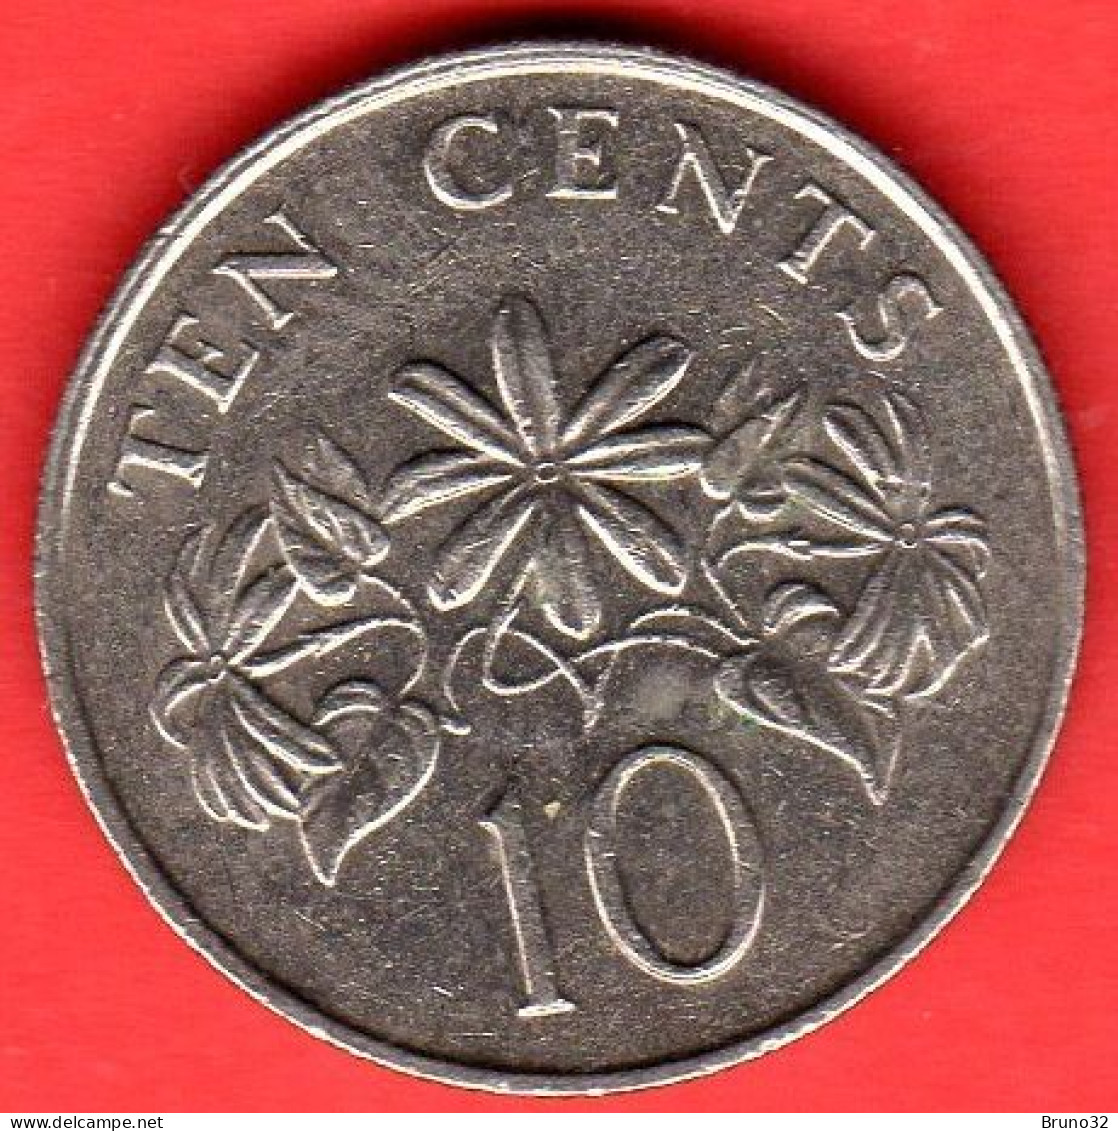 SINGAPORE - Singapura - 1988 - 10 Cents - SPL/XF - Come Da Foto - Singapur